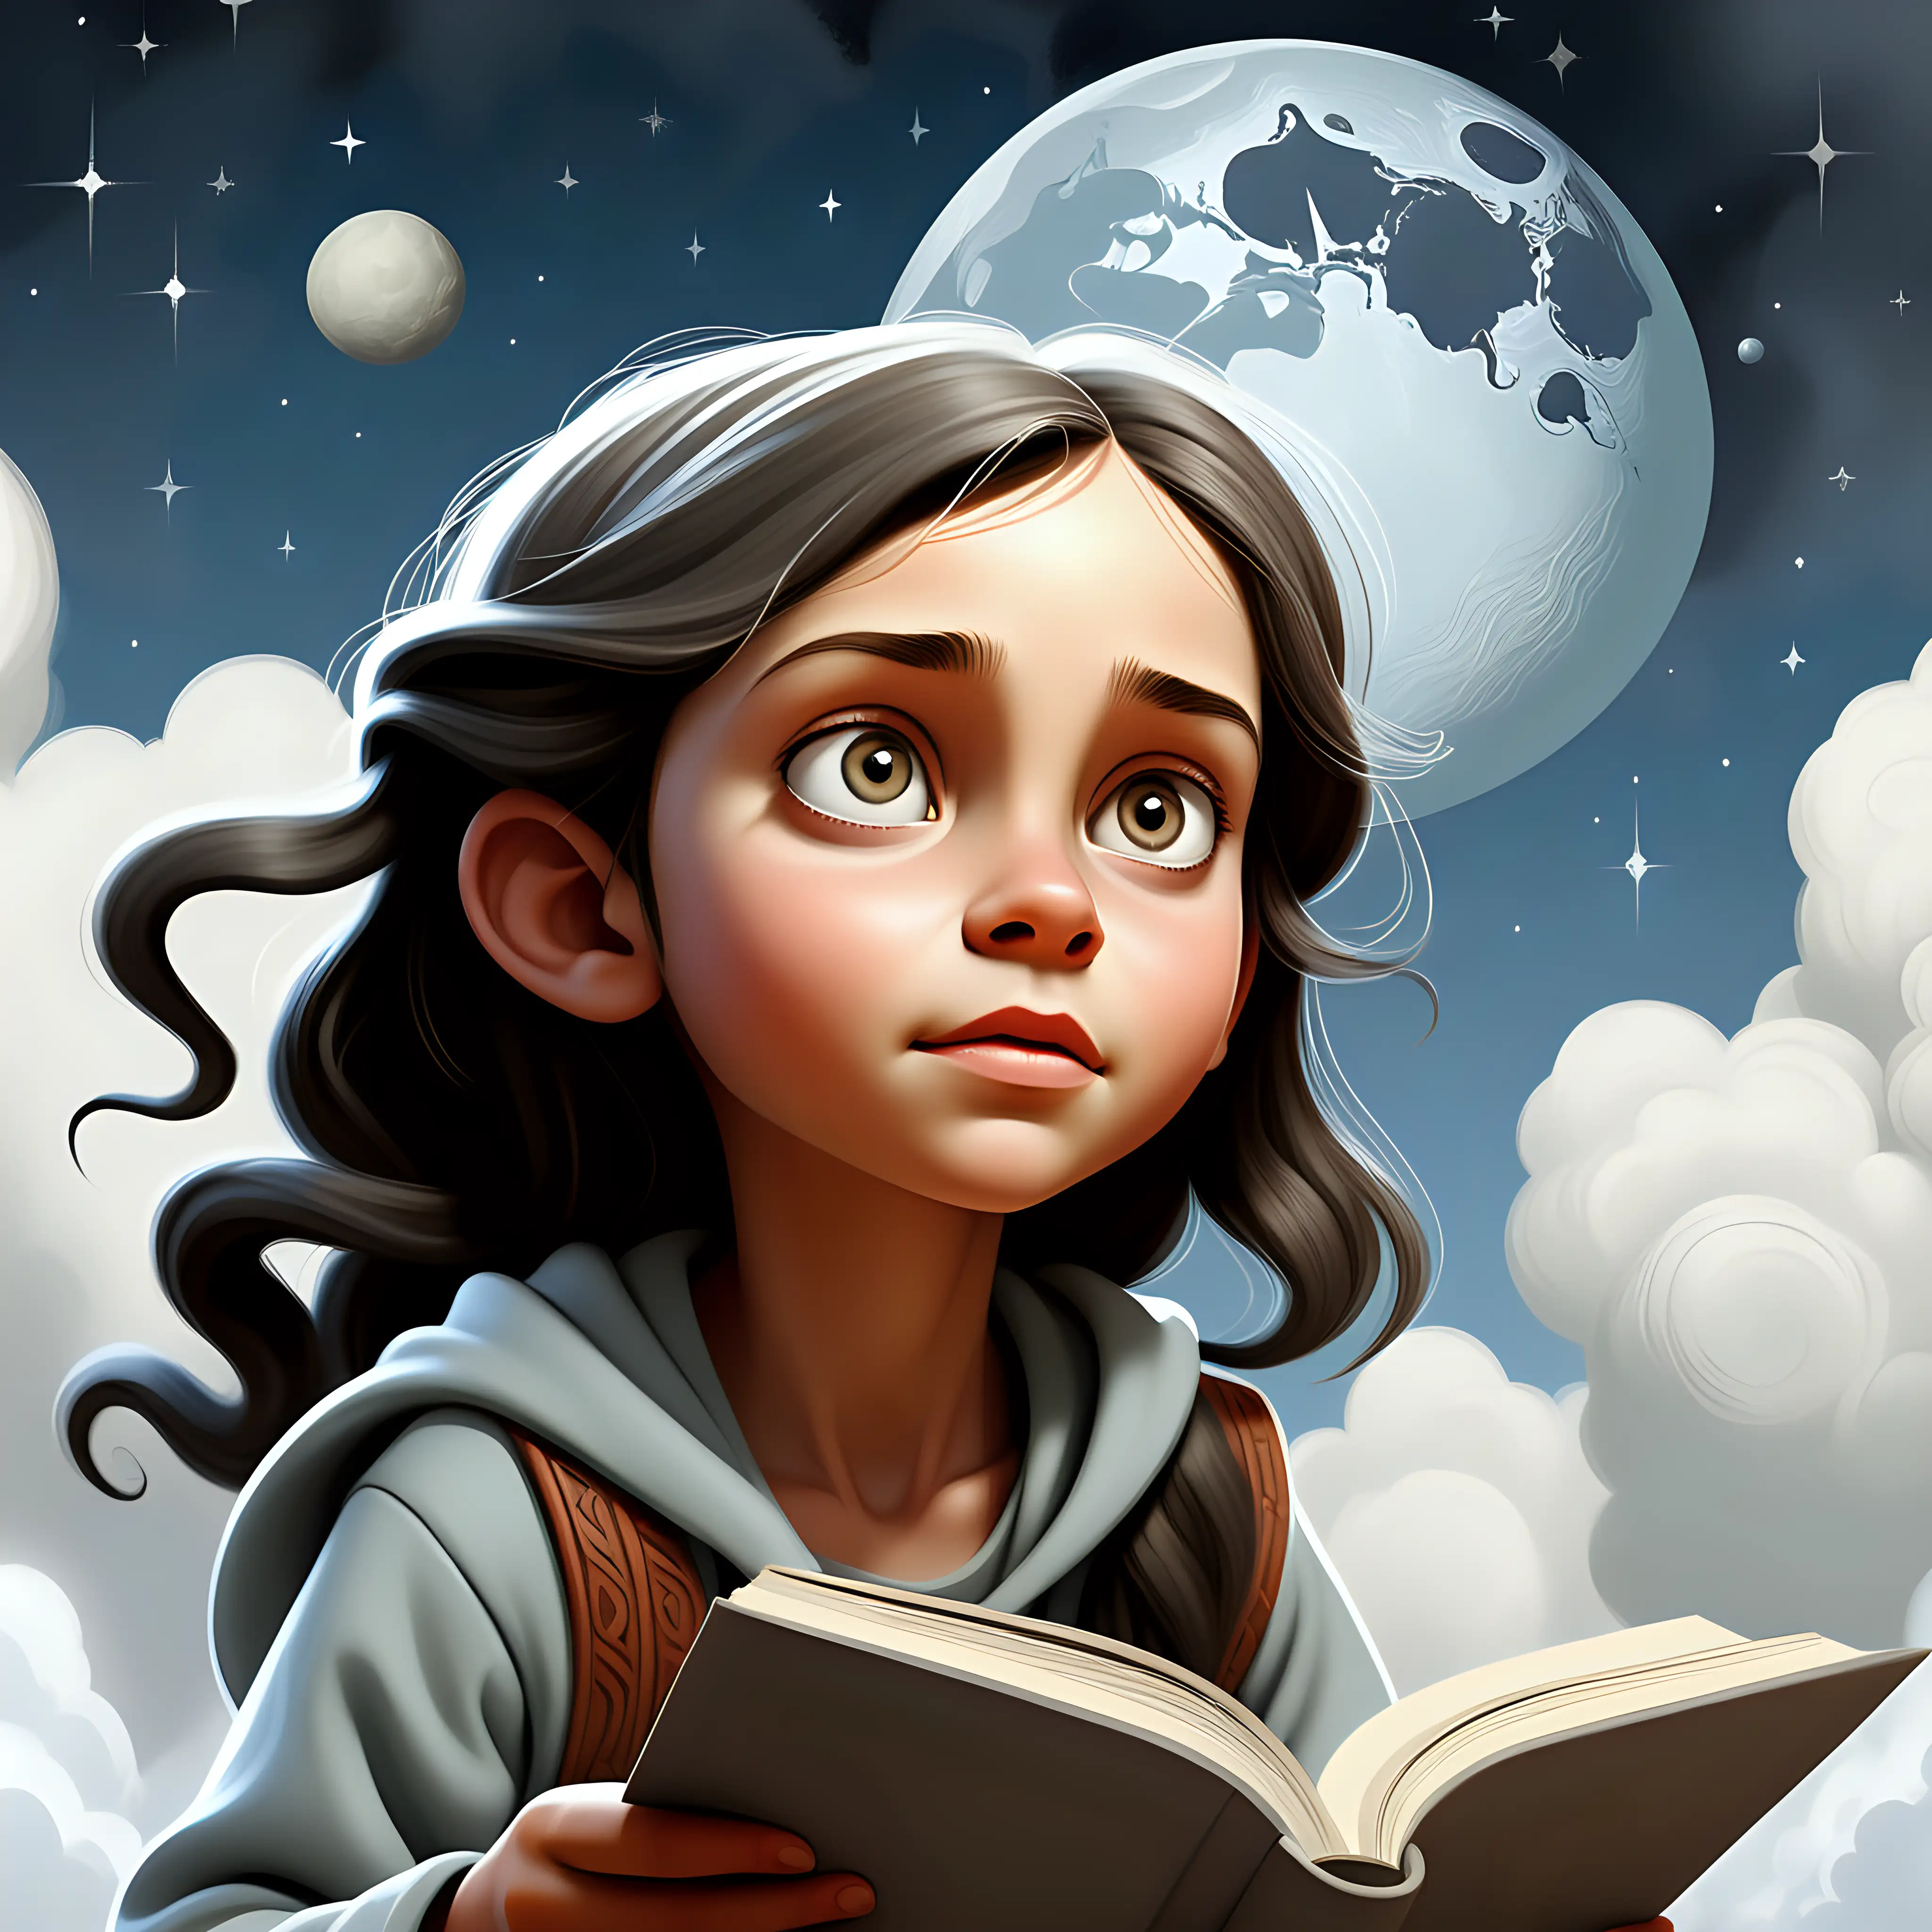 Enchanting 10YearOld Girl Gazing at Ater Tumti in Sky Childrens Book Illustration